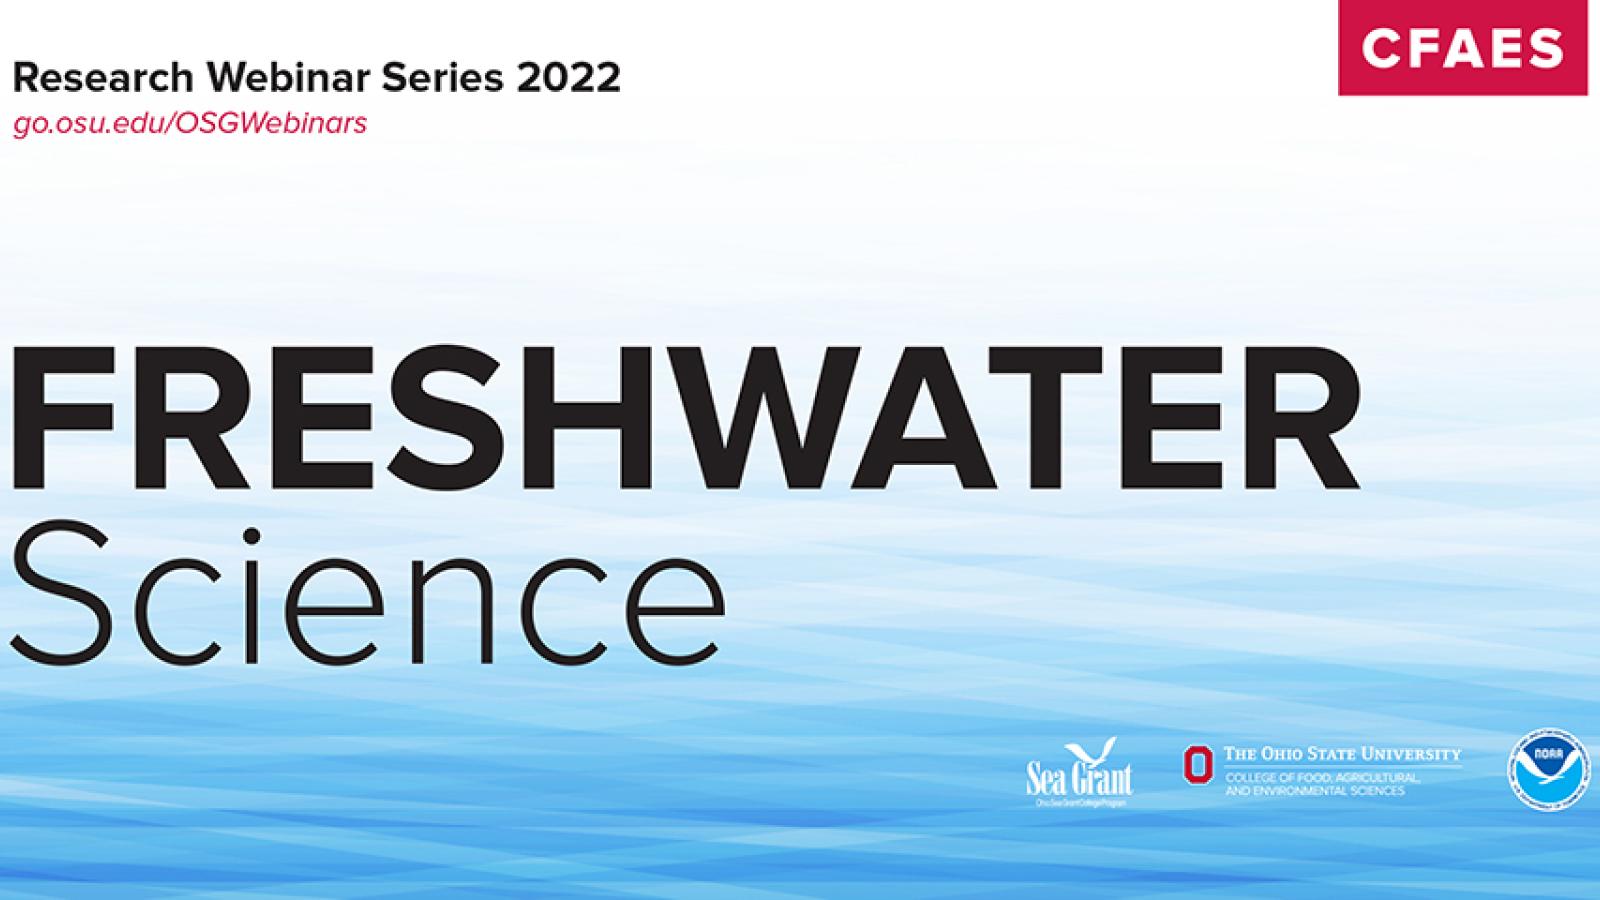 flyer includes "Freshwater Science", "research webinar series 2022", "go.osu.edu/OSGWebinars "CFAES", 